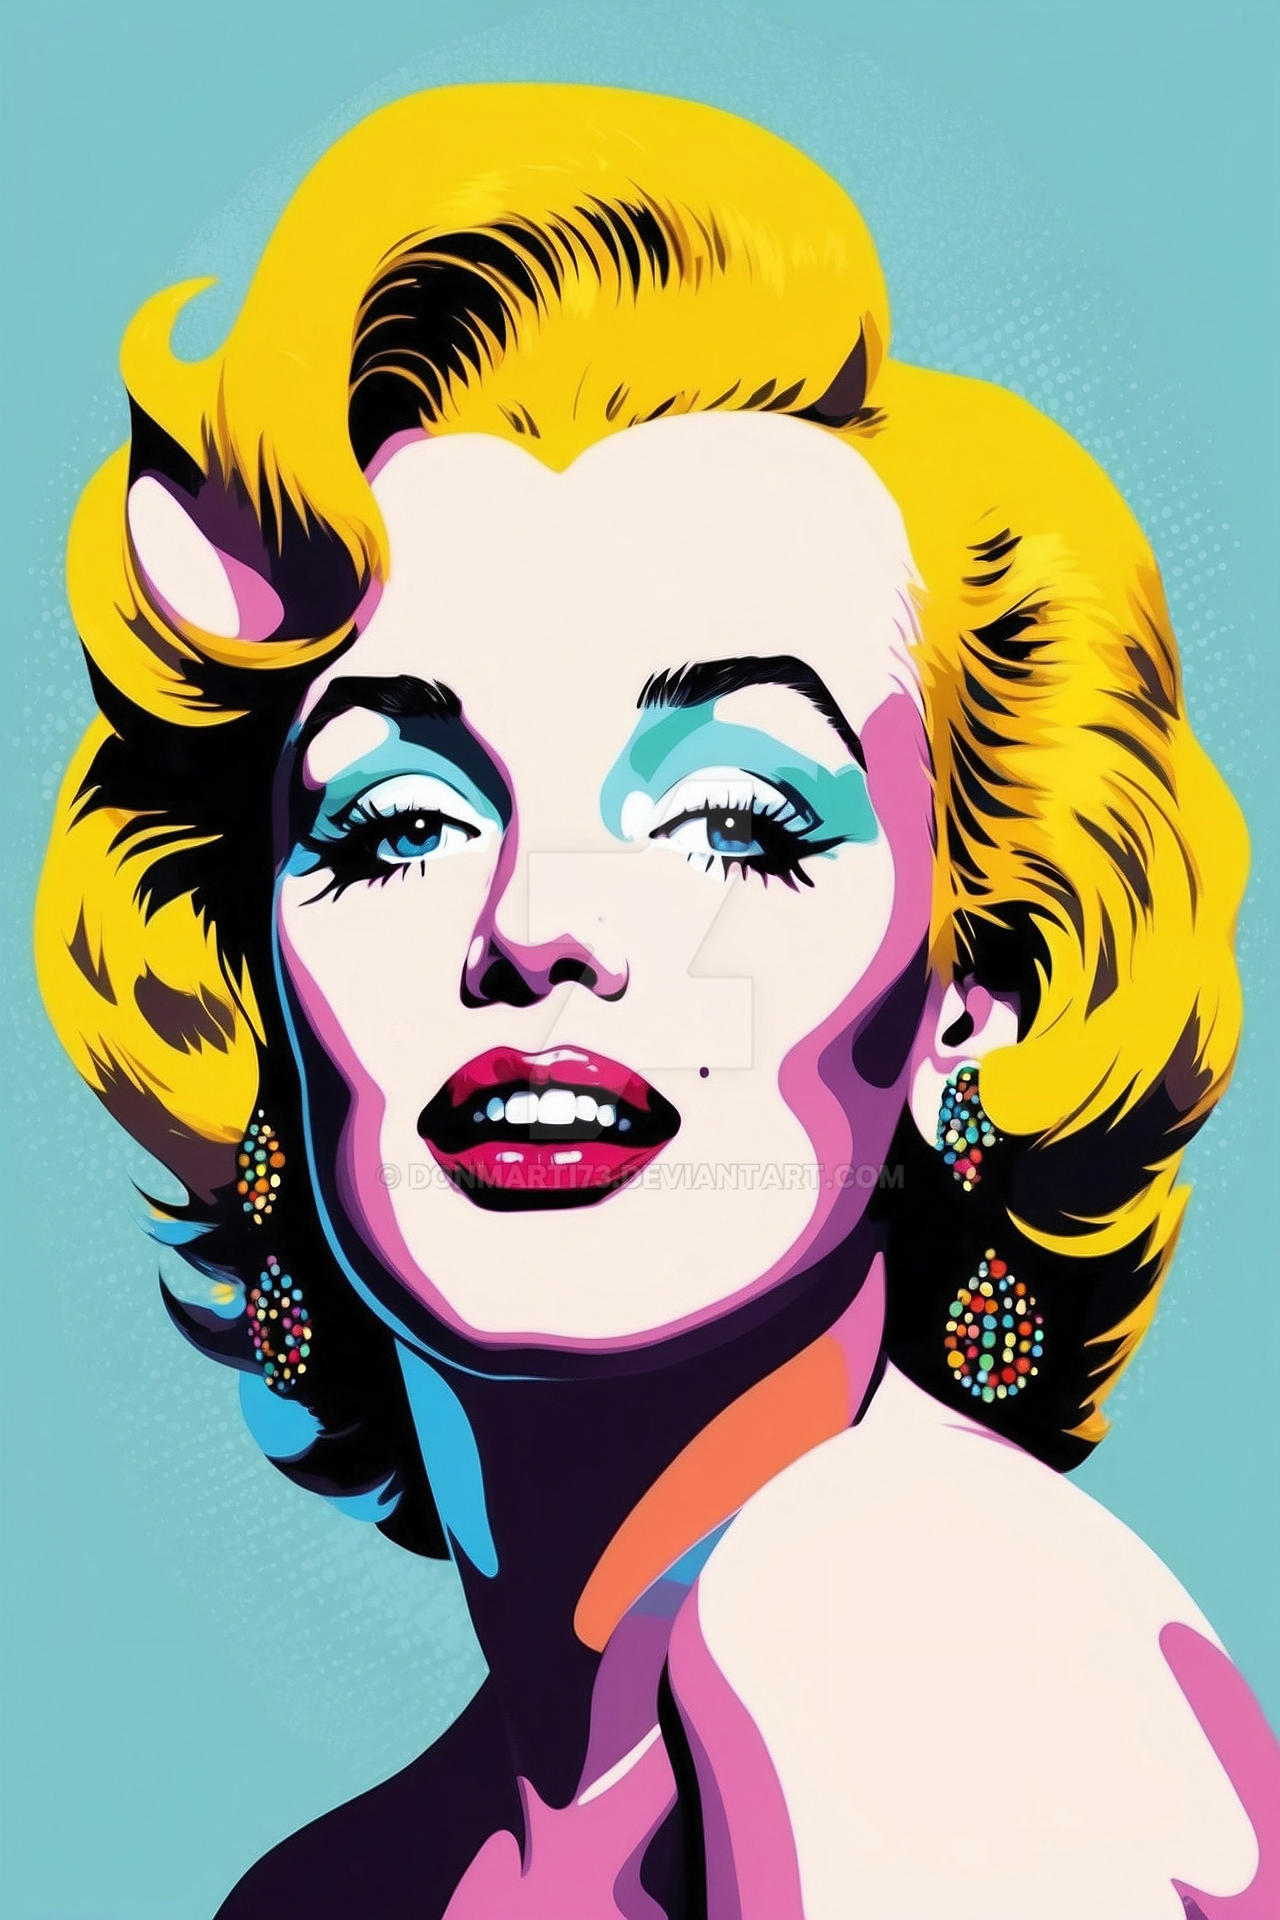 Marilyn Monroe 5 by DonMarti73 on DeviantArt